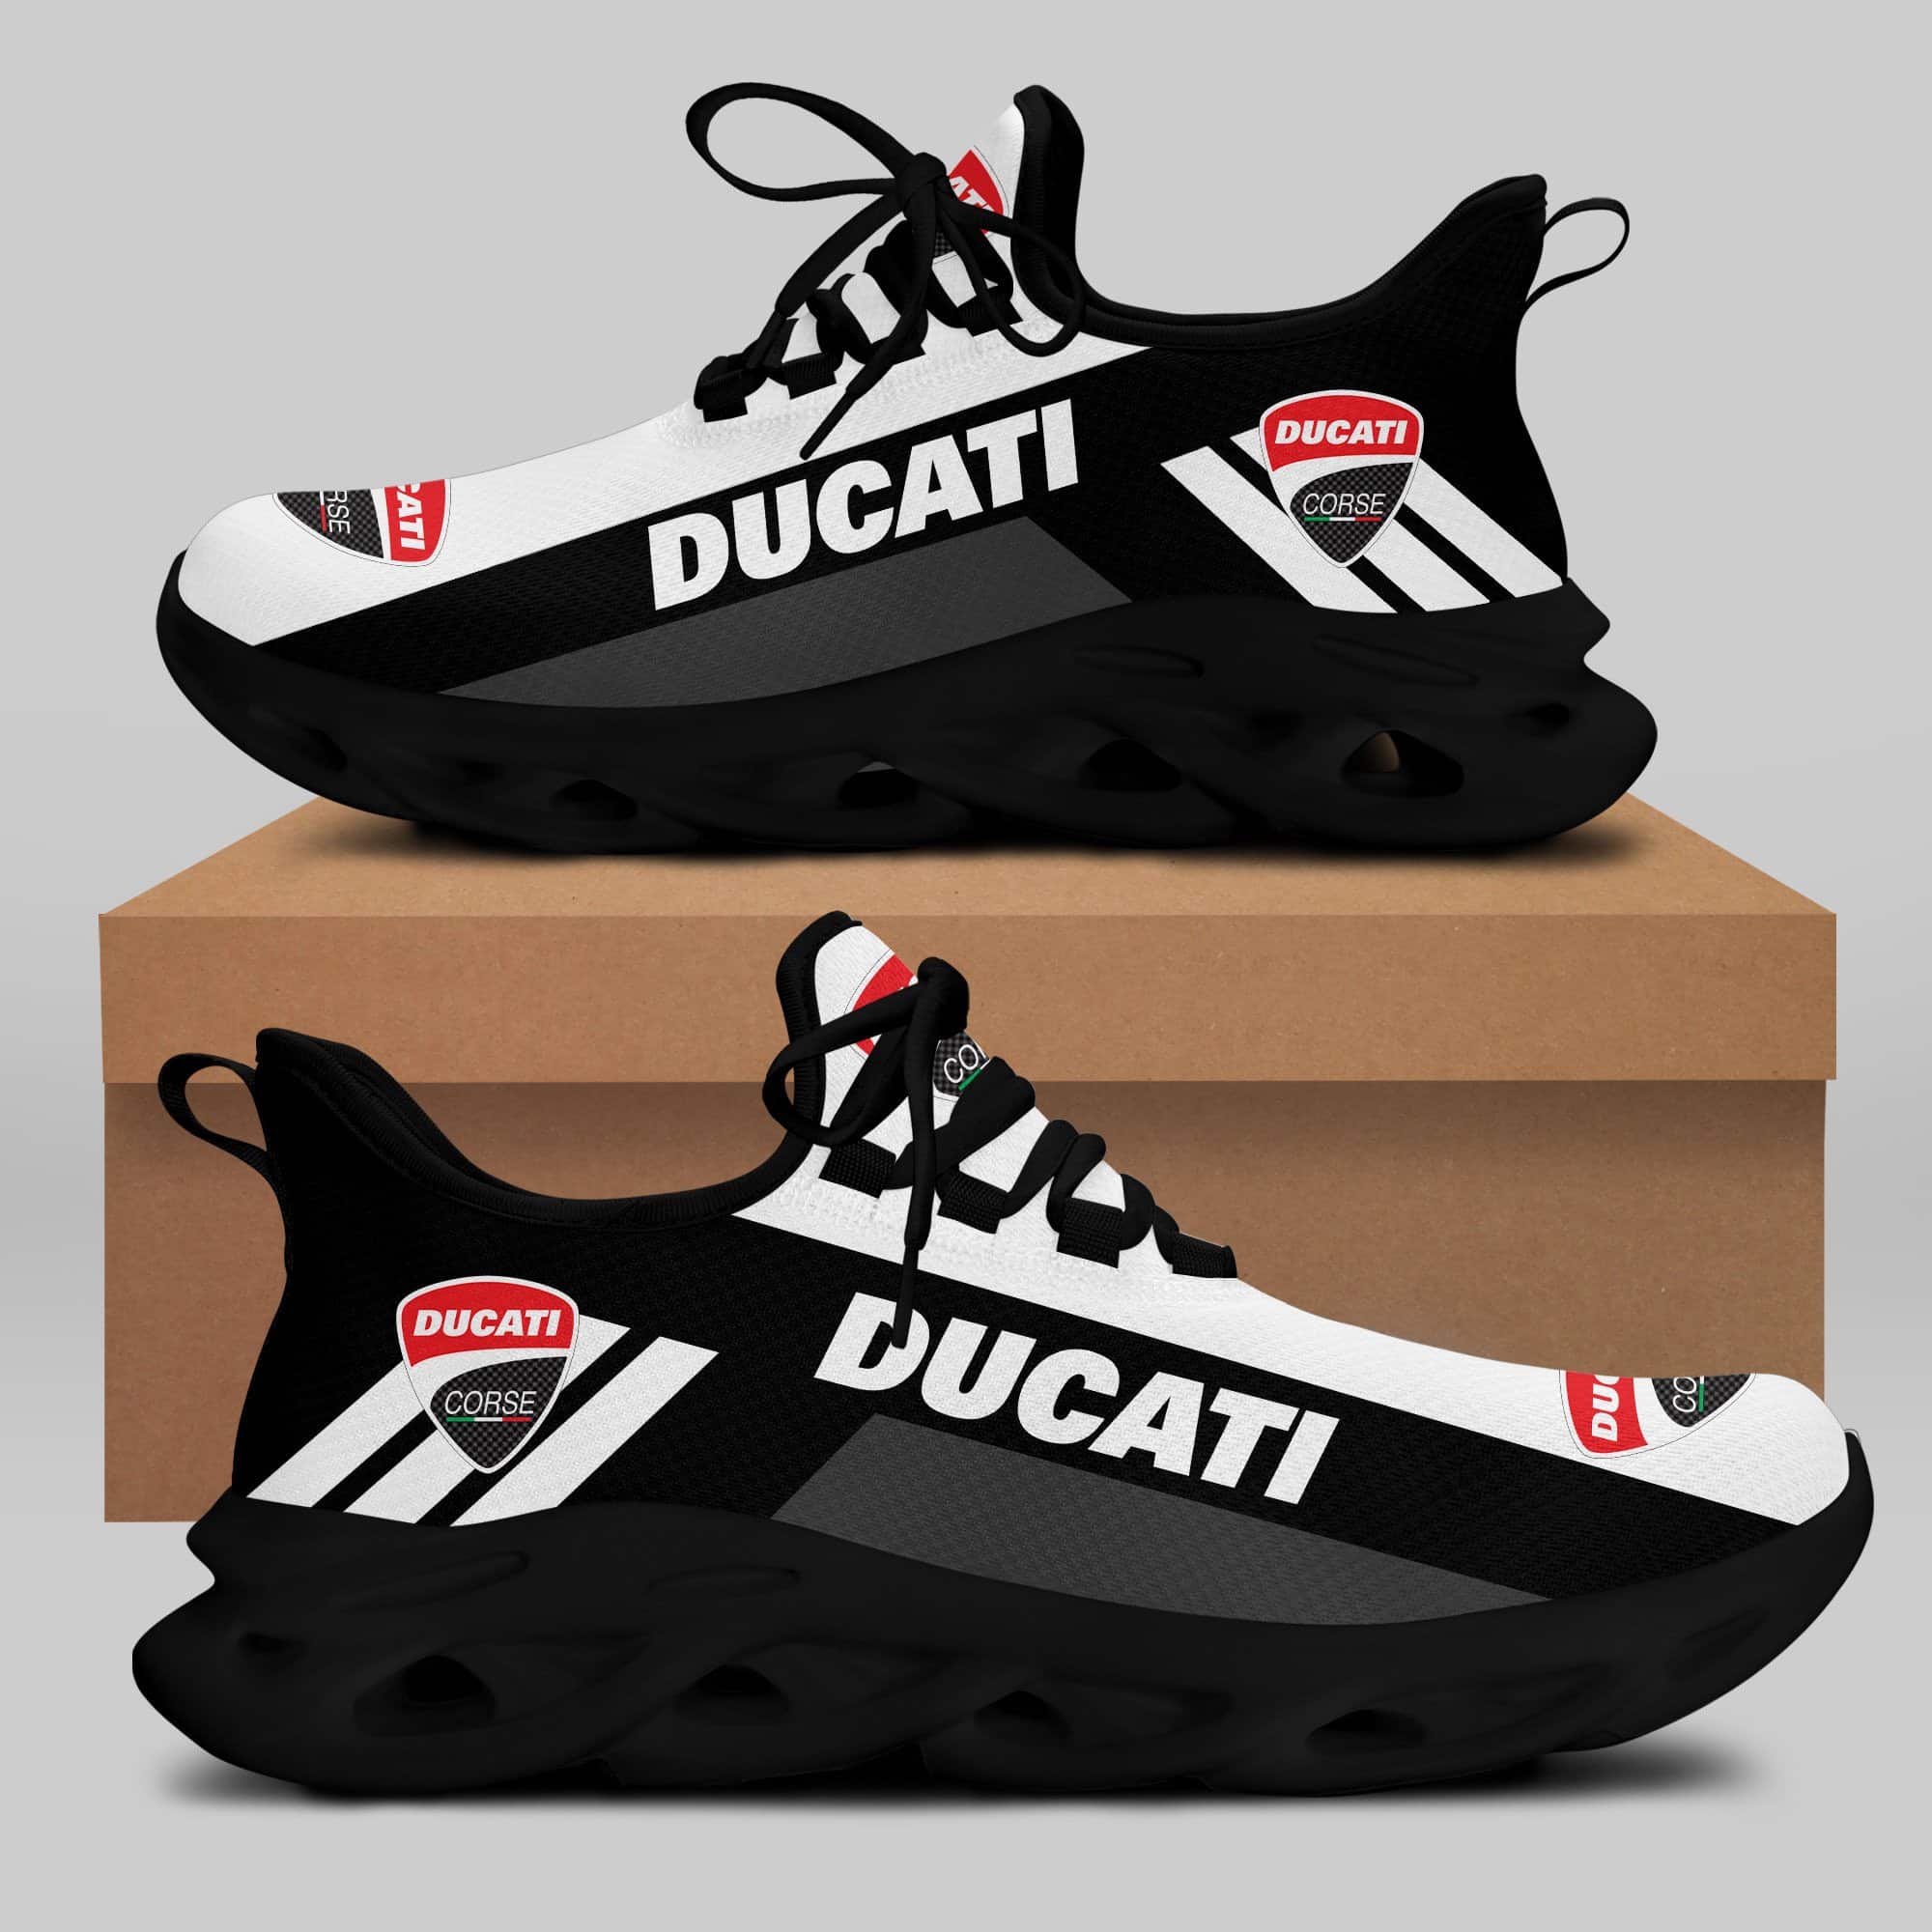 Ducati Racing Running Shoes Max Soul Shoes Sneakers Ver 40 2